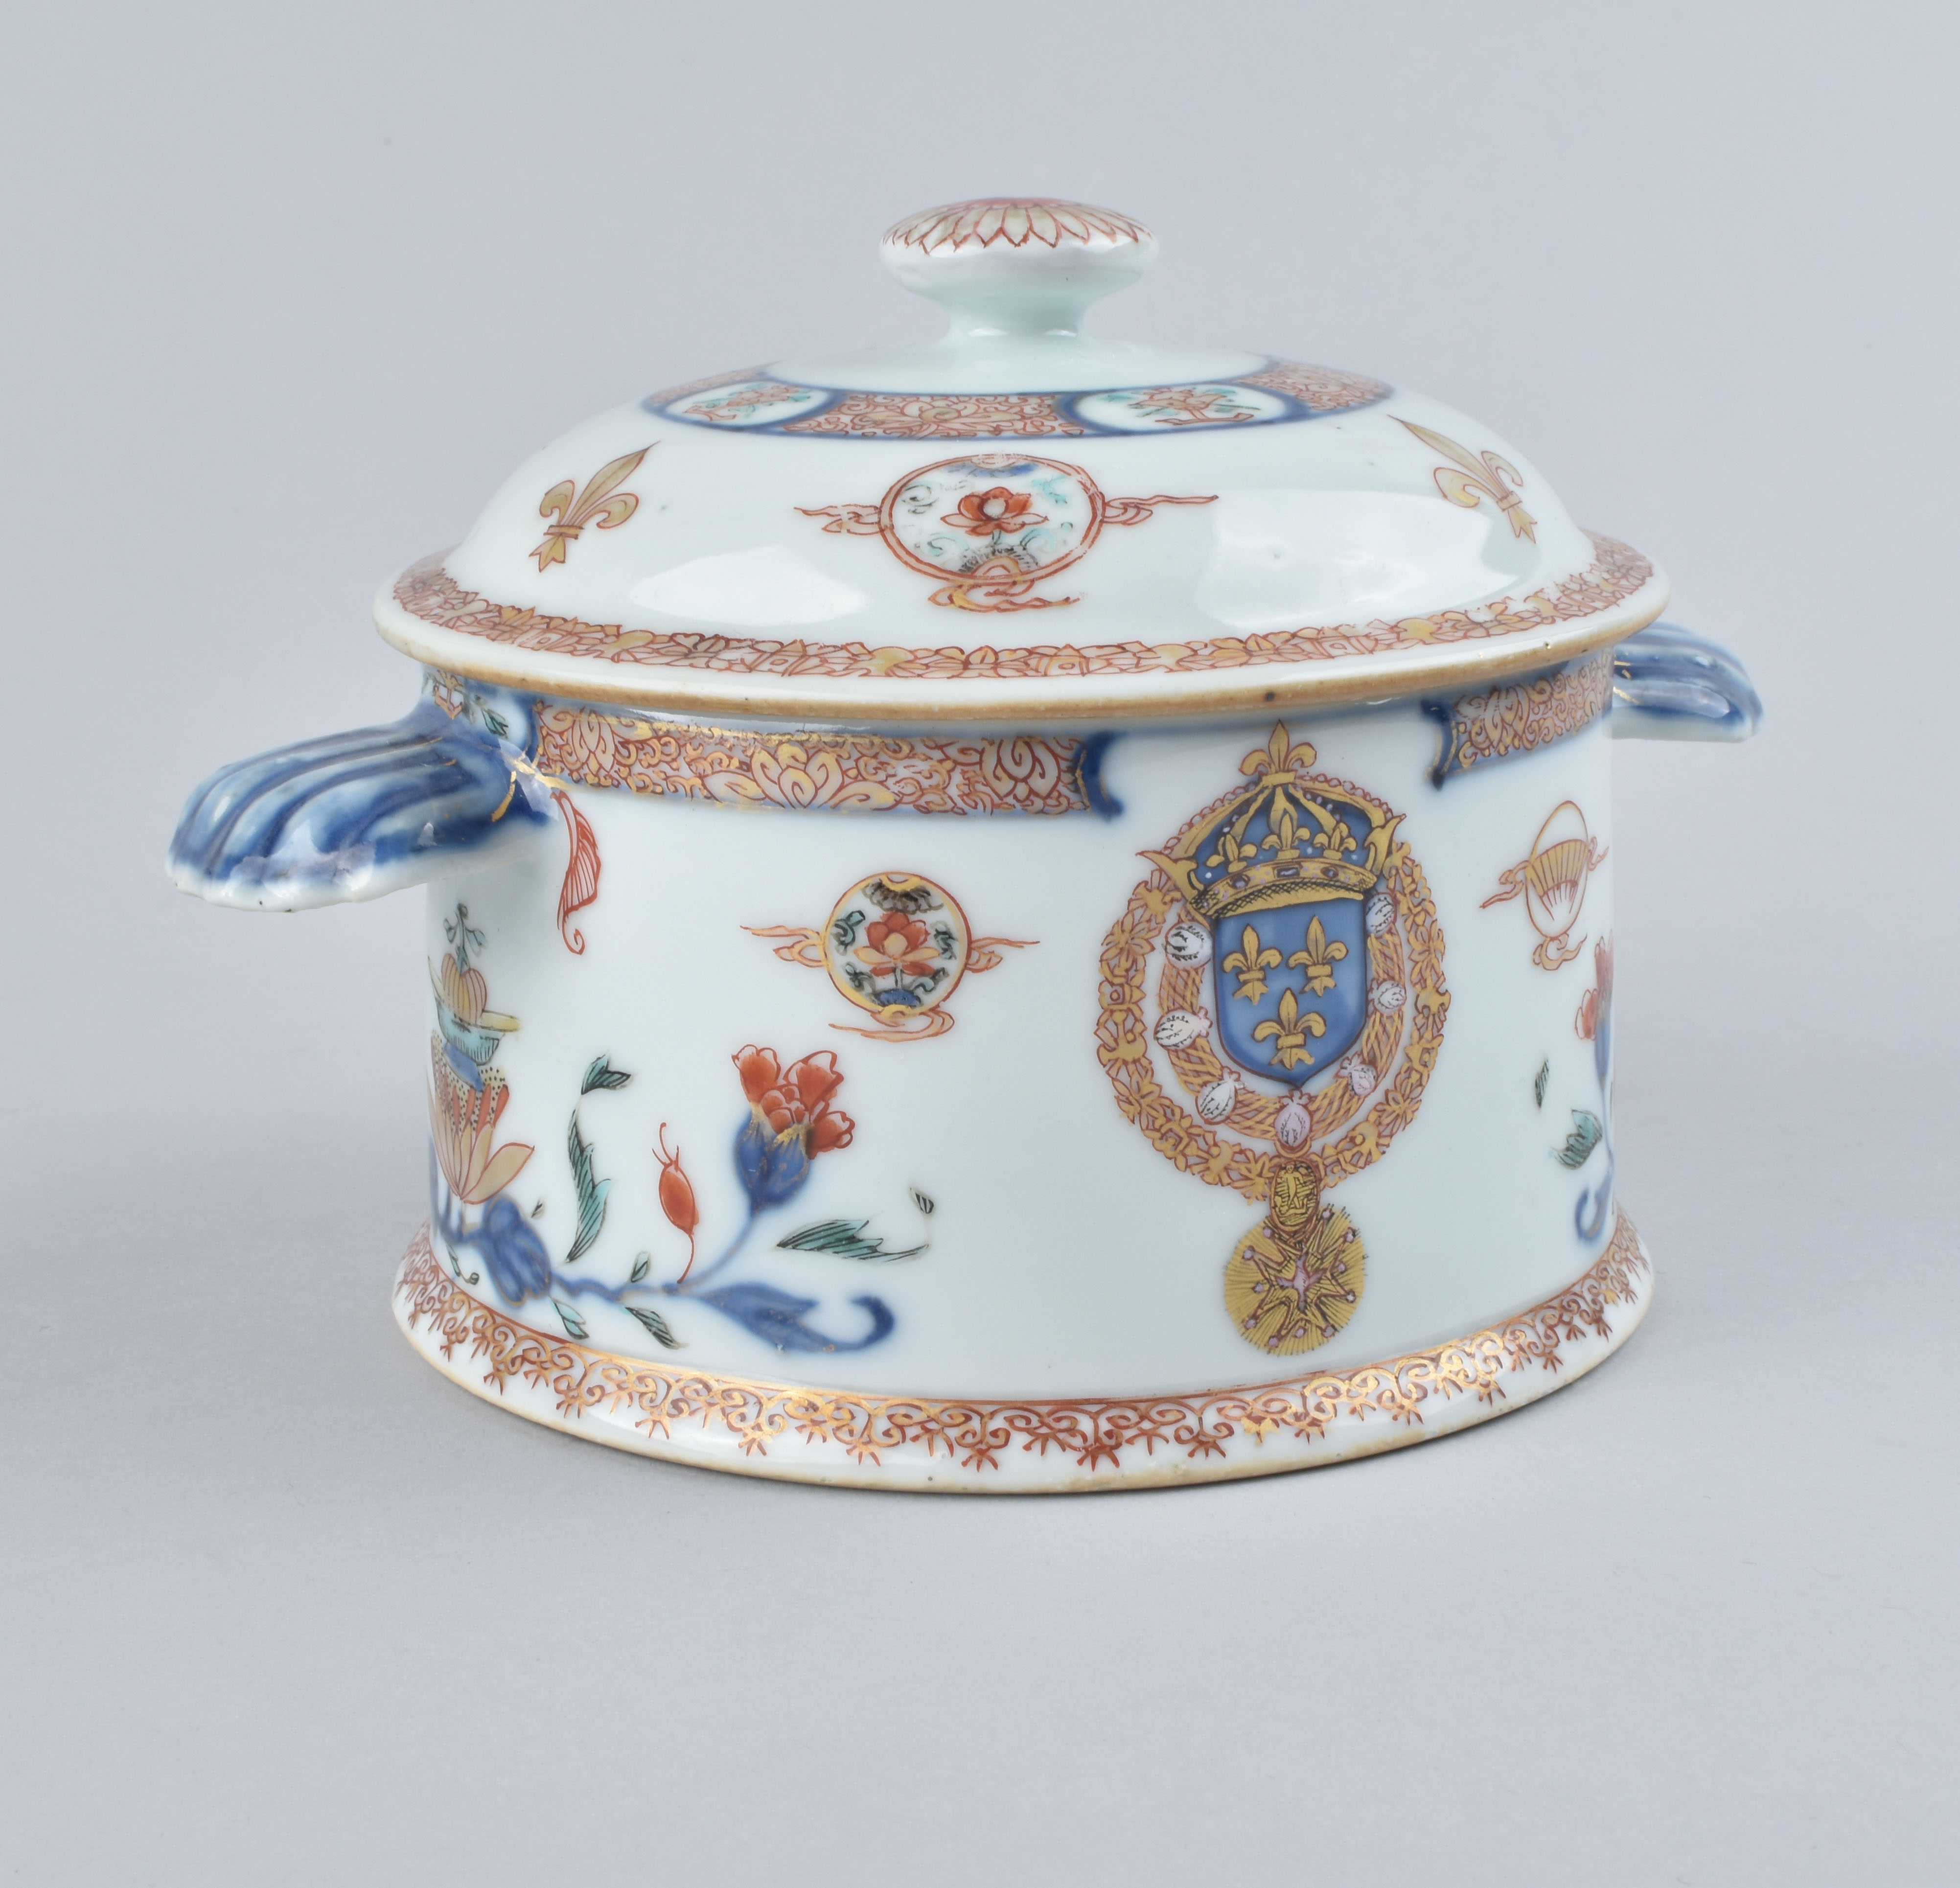 Porcelaine Qianlong (1736-1795), ca. 1738-1740, Chine